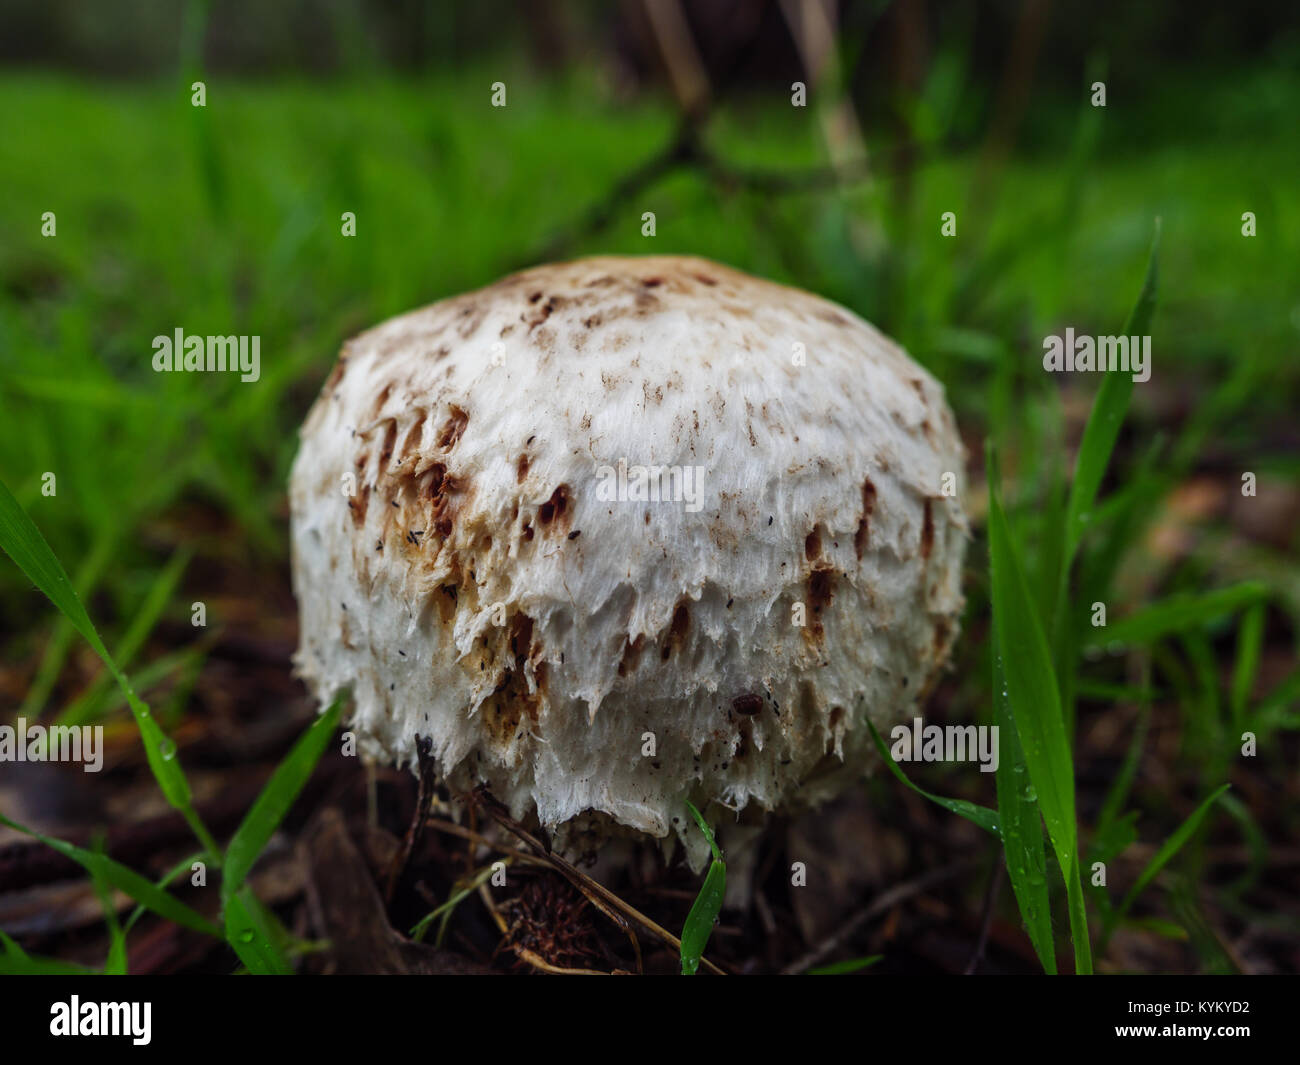 wild mushroom in grass western australia Stock Photo